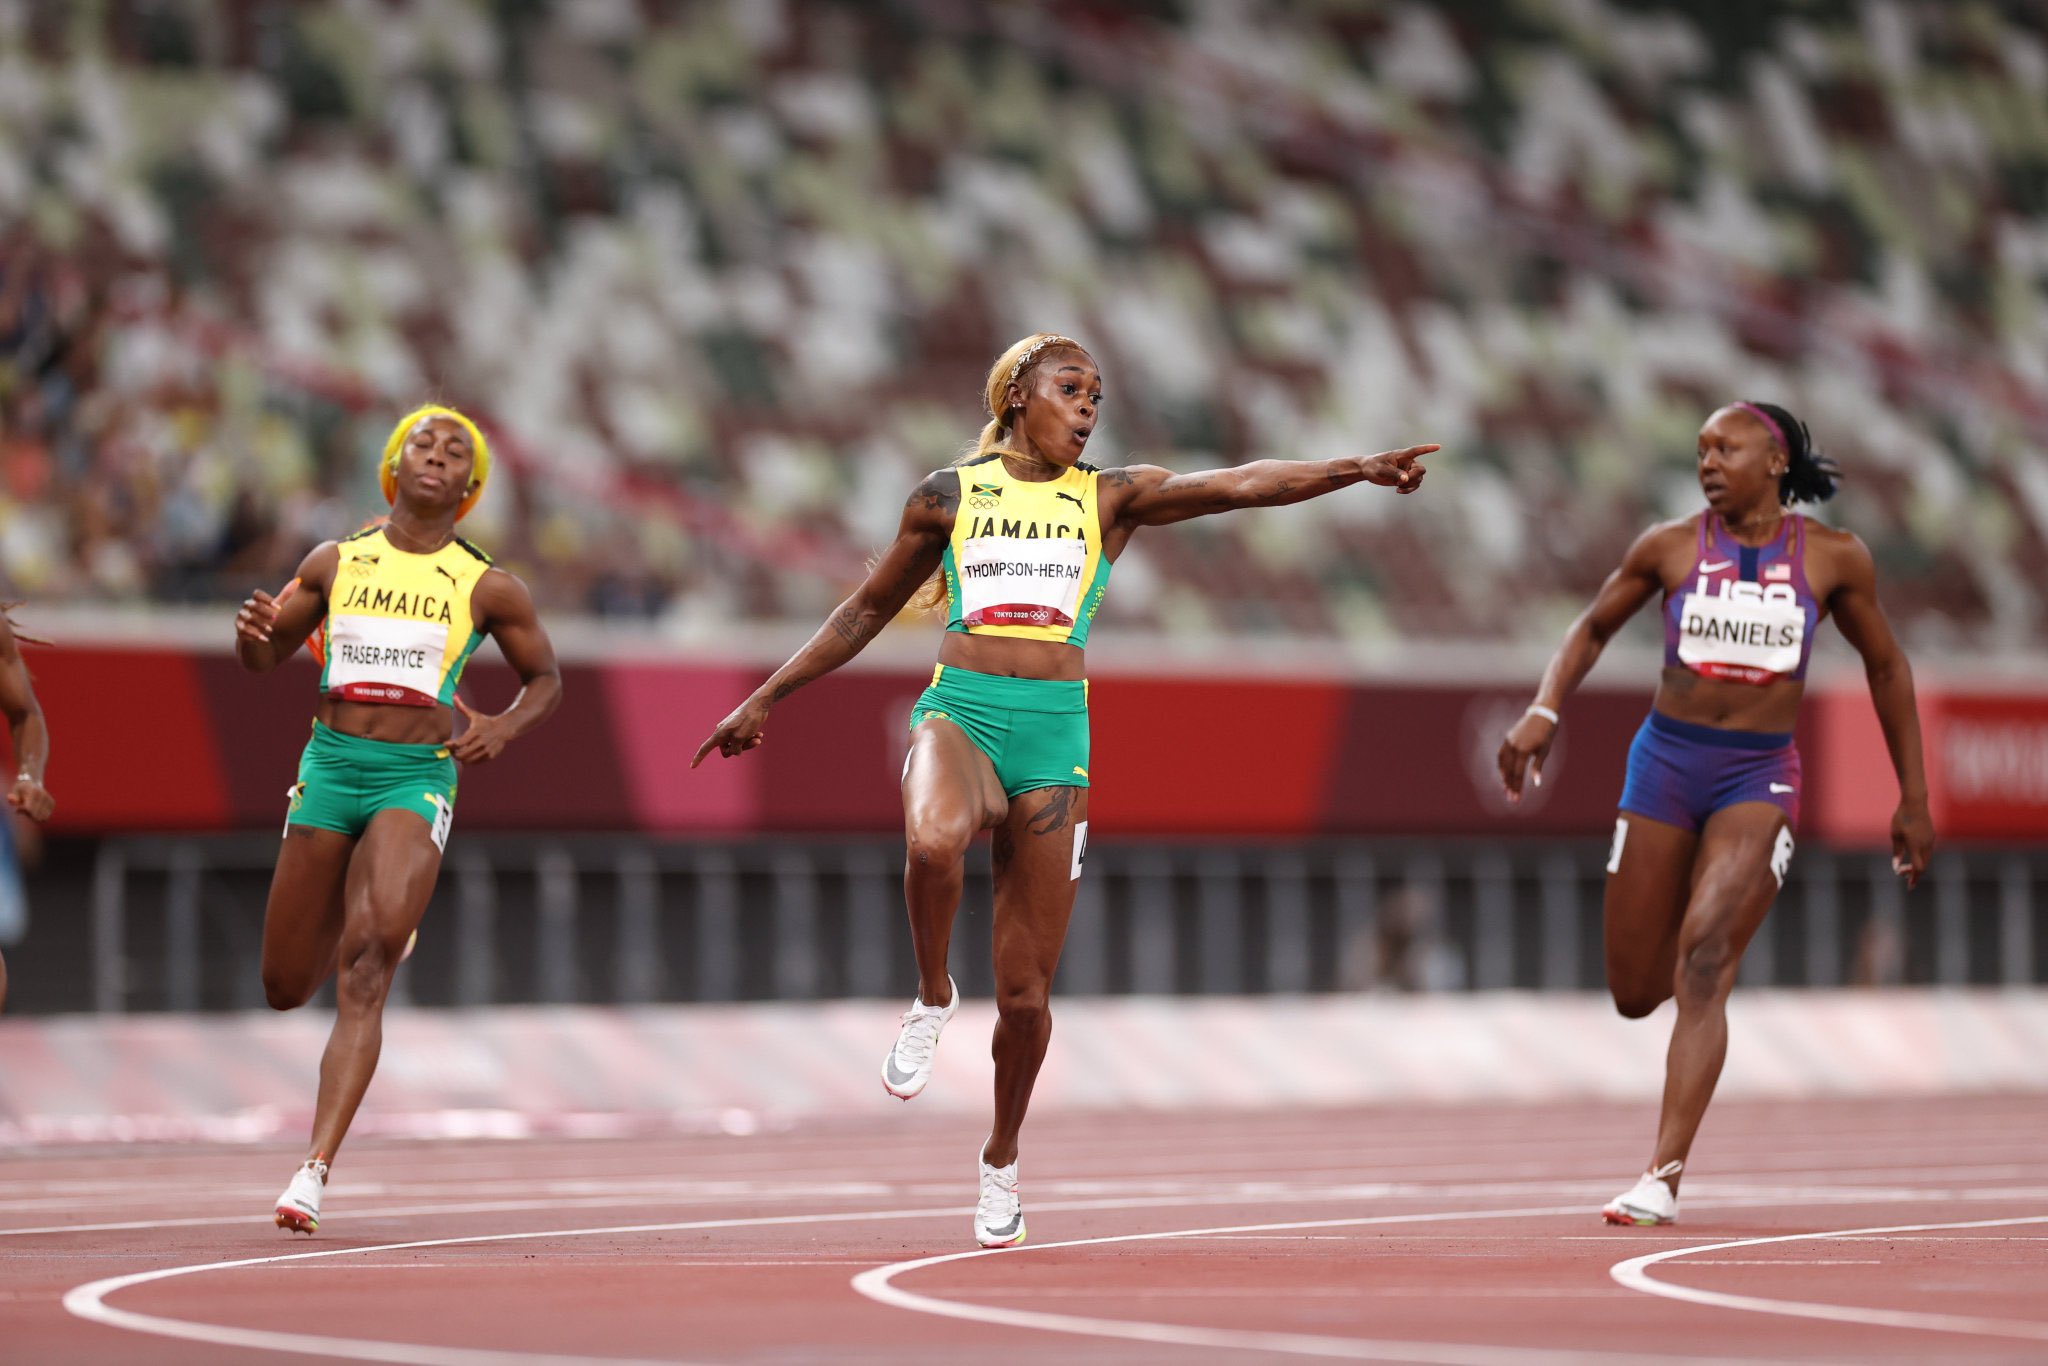 Podium jamaican in cursa feminina de 100 metri. A fost corectat recordul olimpic vechi de 33 ani!